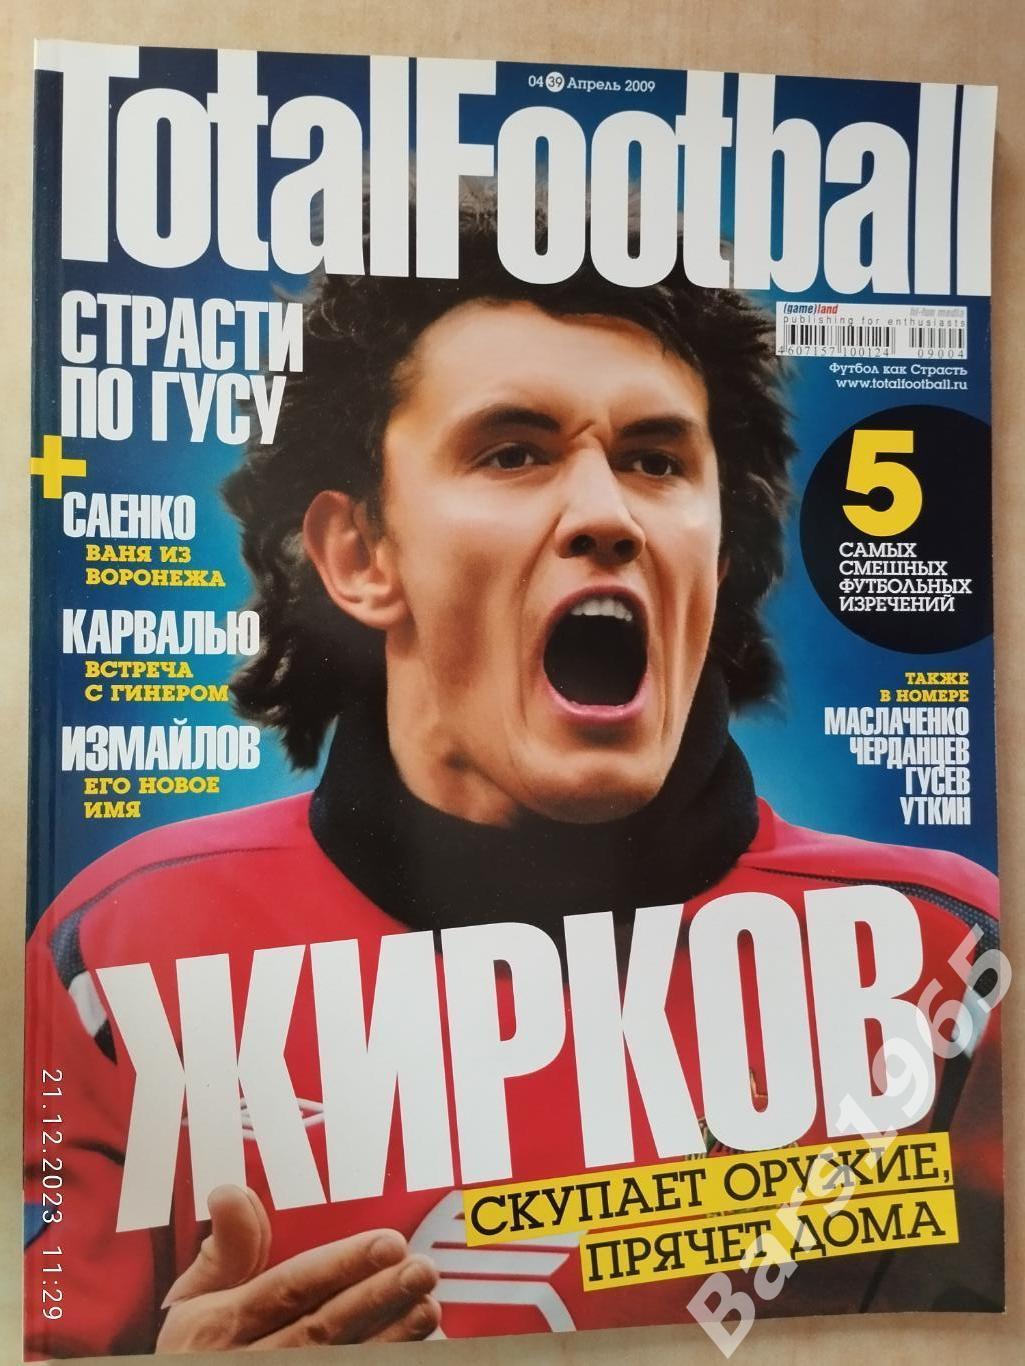 Total Football № 4 (39) 2009 с постером